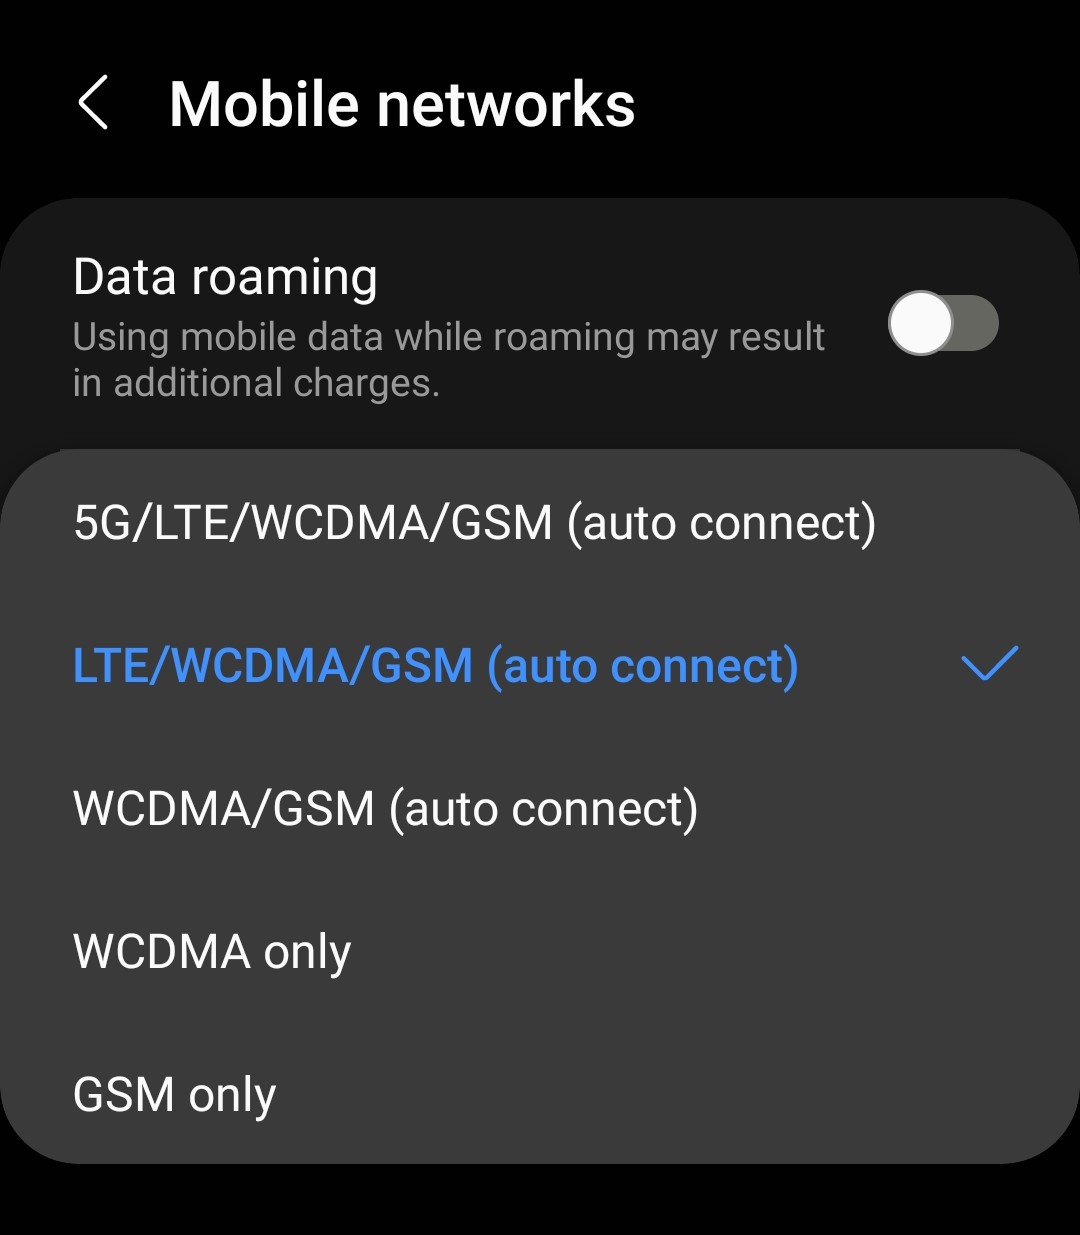 network mode